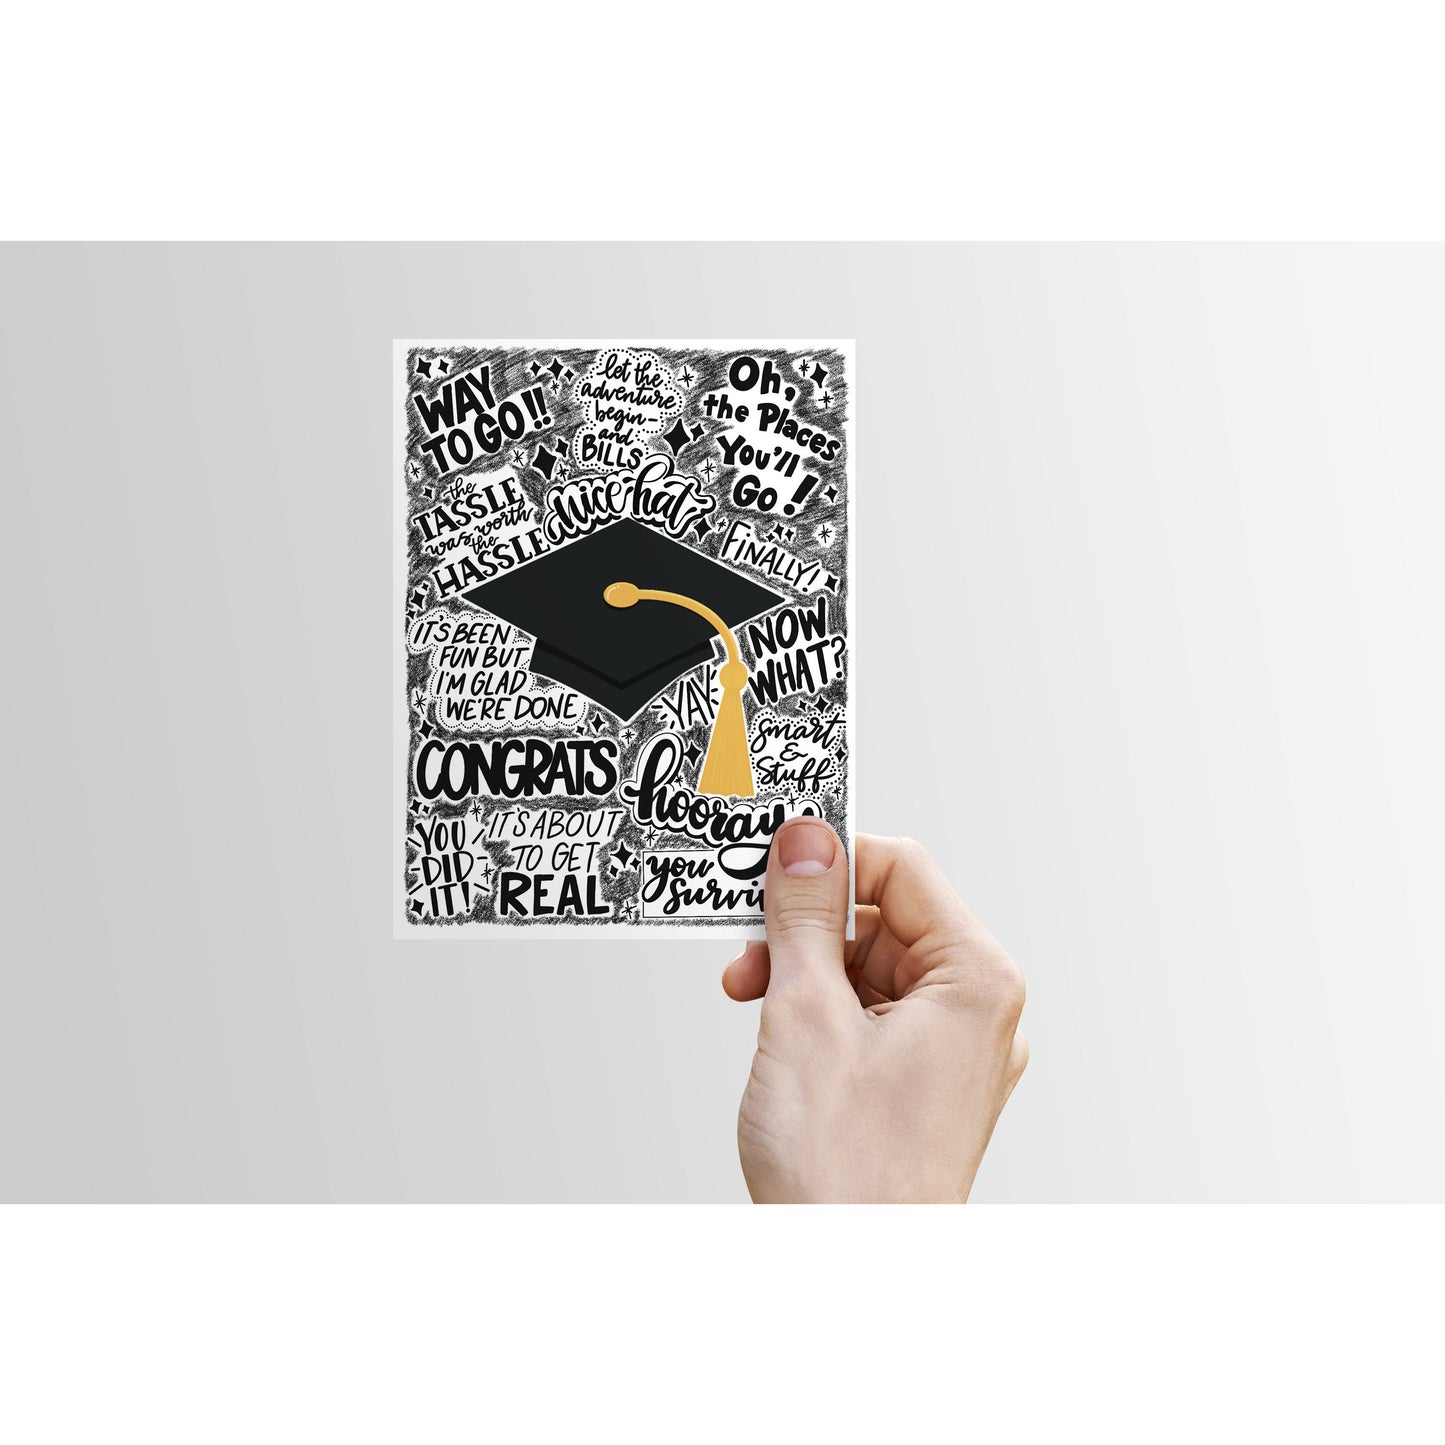 Graduation Card - Sketch Style | graduate, congrats, proud of you, sentiments